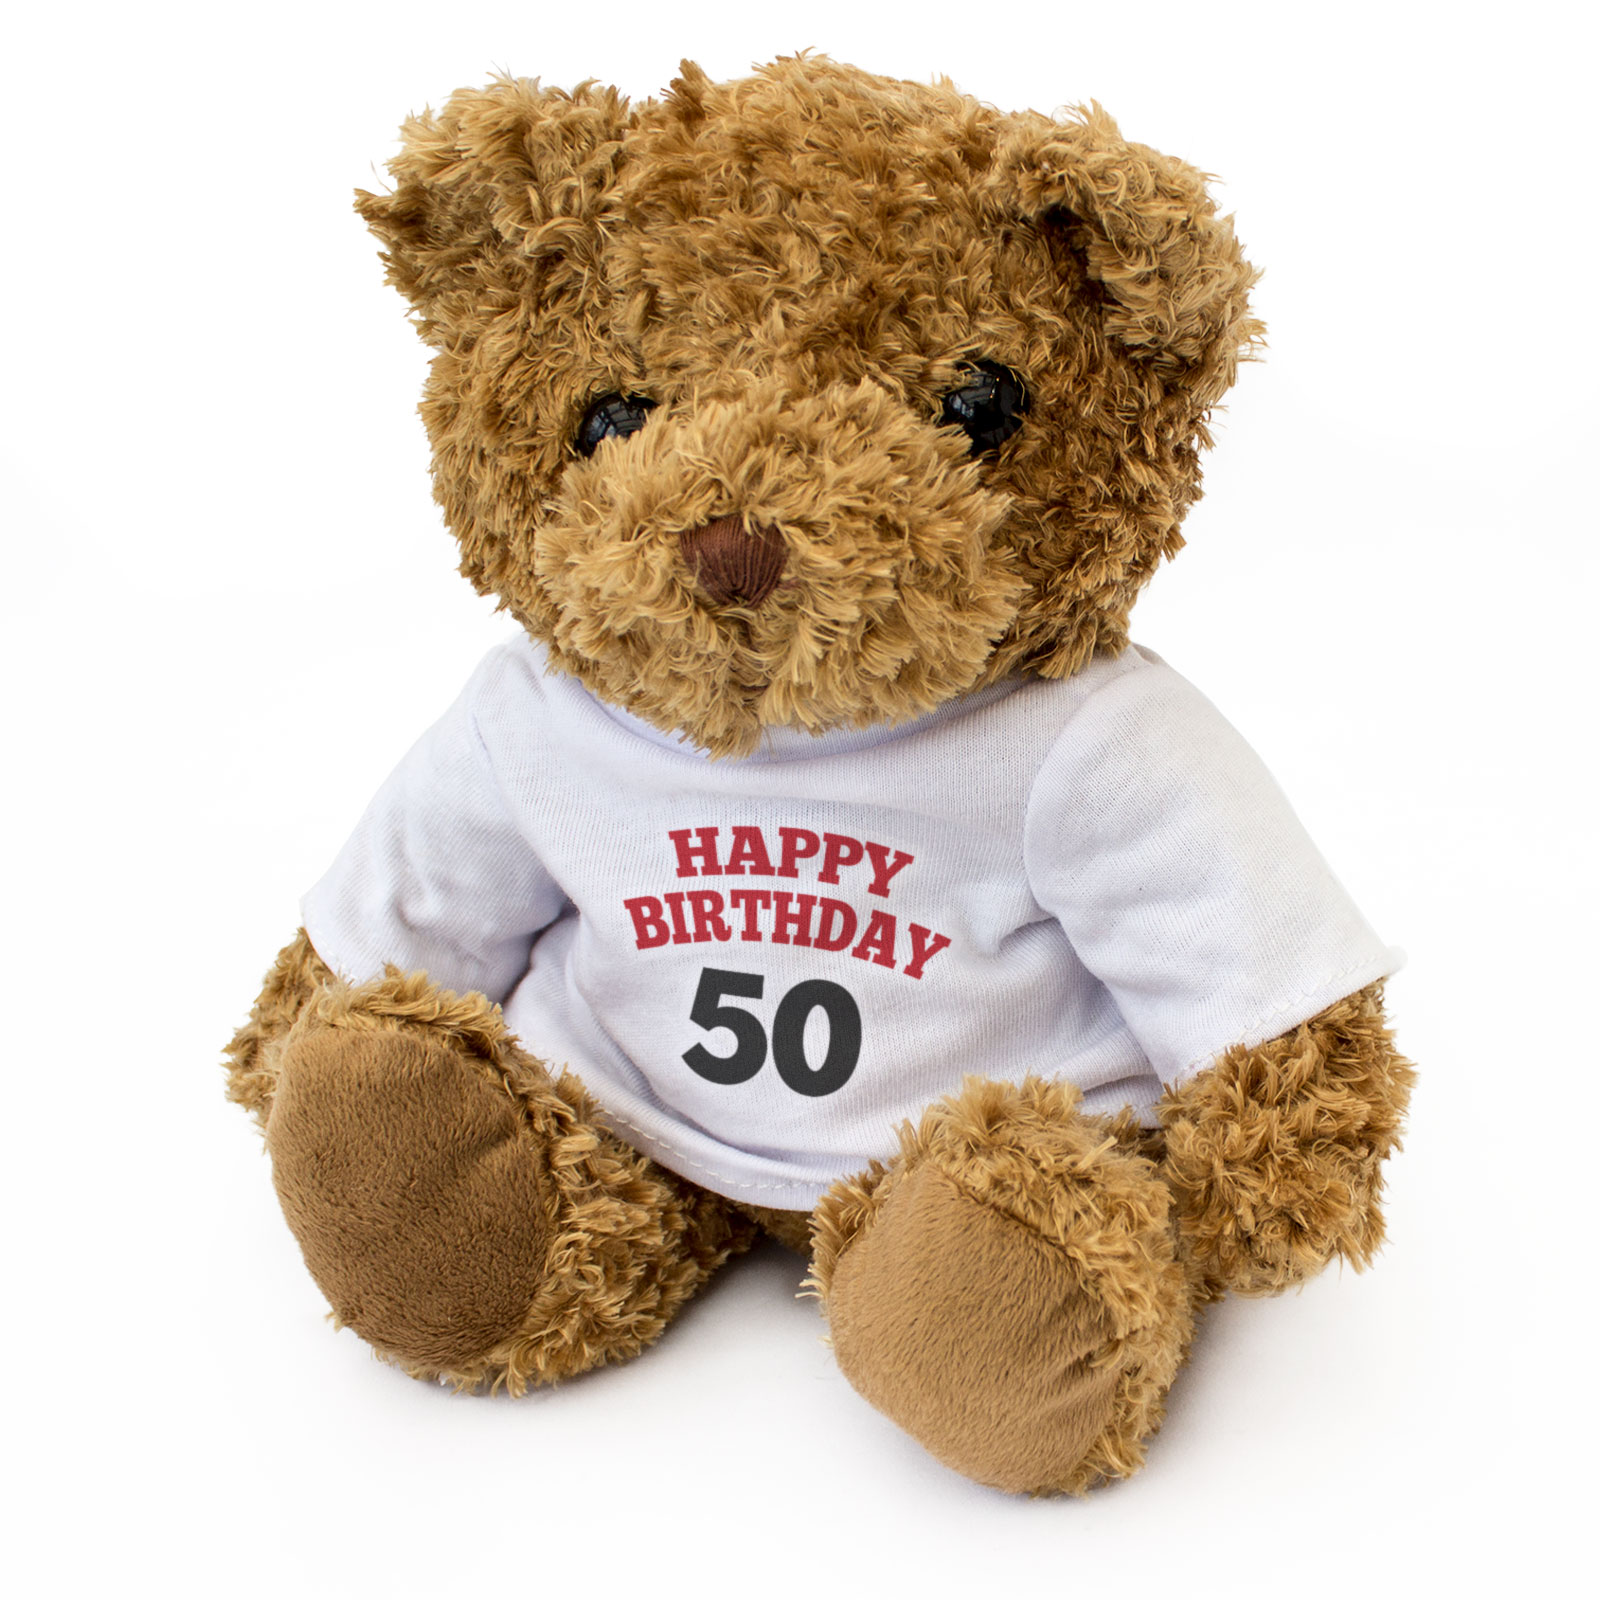 Happy Birthday 50 Years Old - Teddy Bear